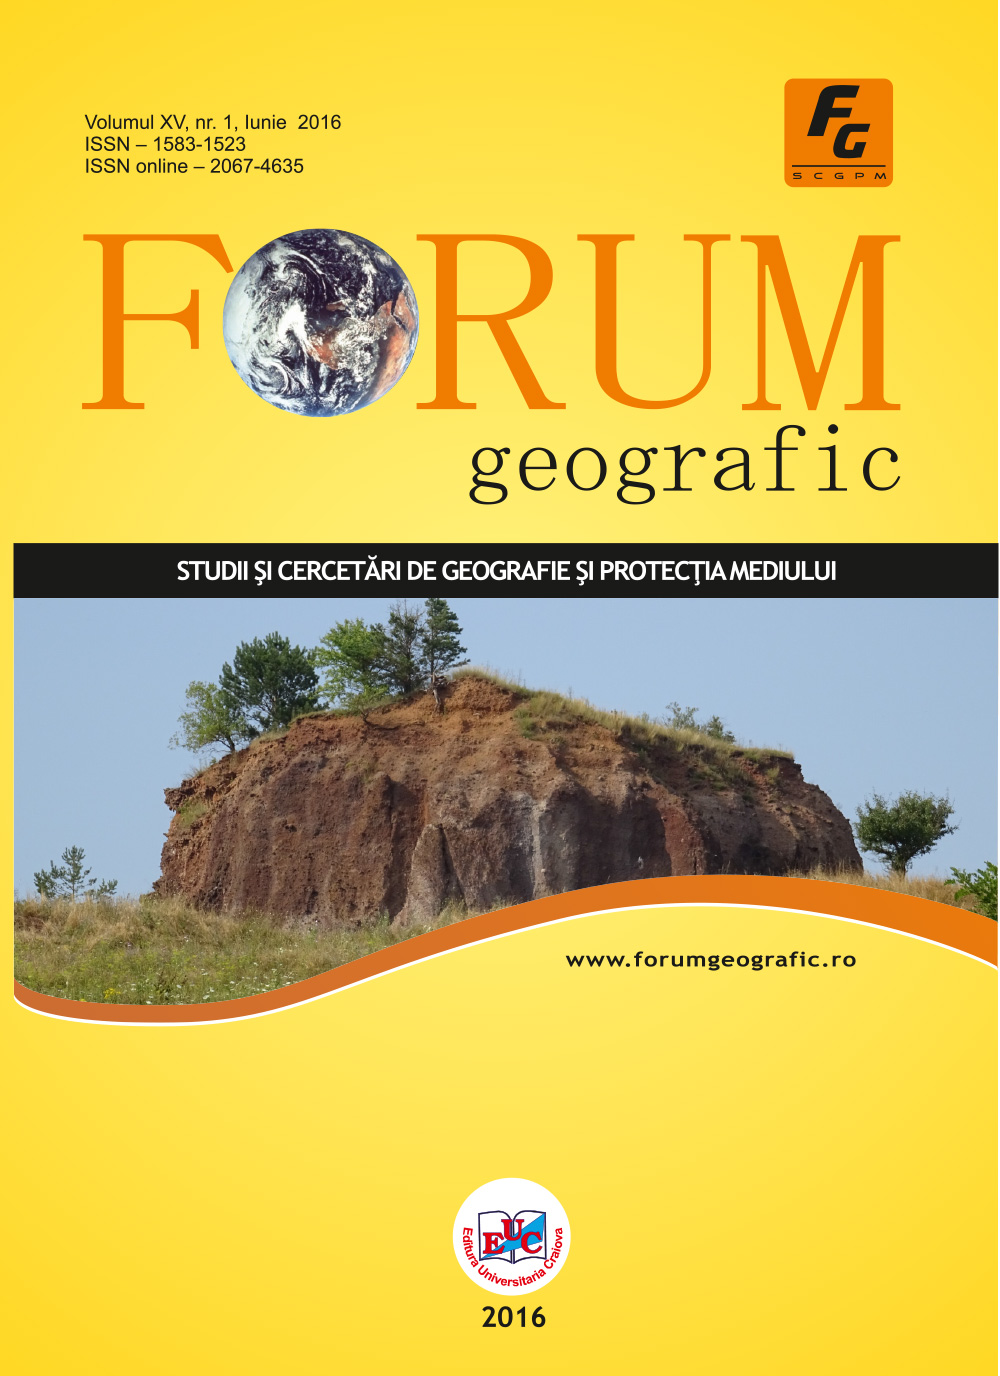 Forum geografic: Volume XV, issue 1